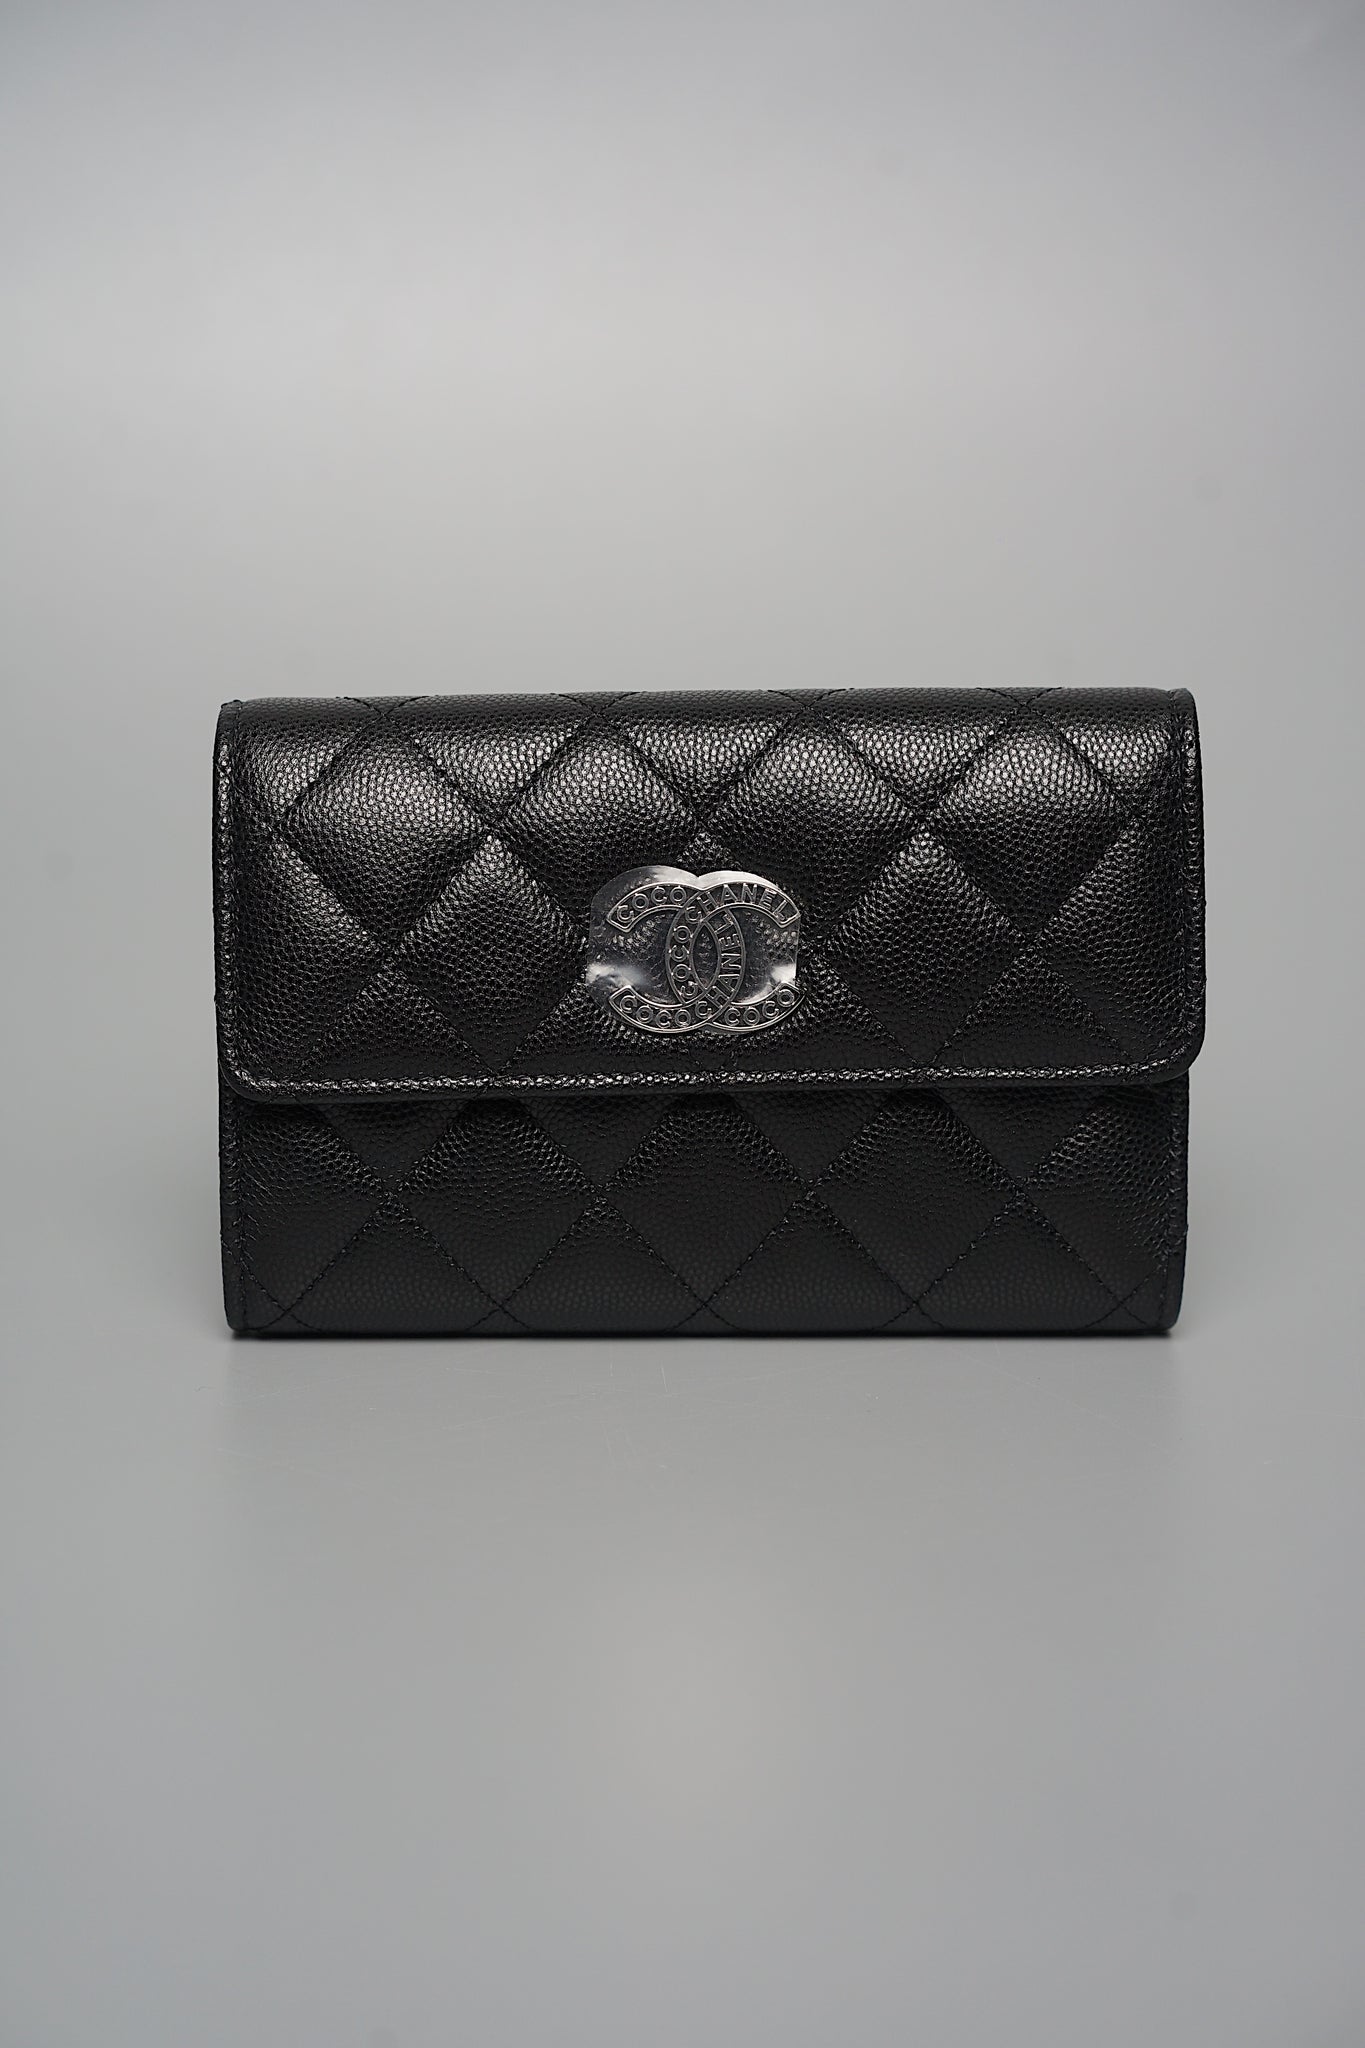 Chanel Medium Flap Wallet in Black Caviar Shw (Brand New)